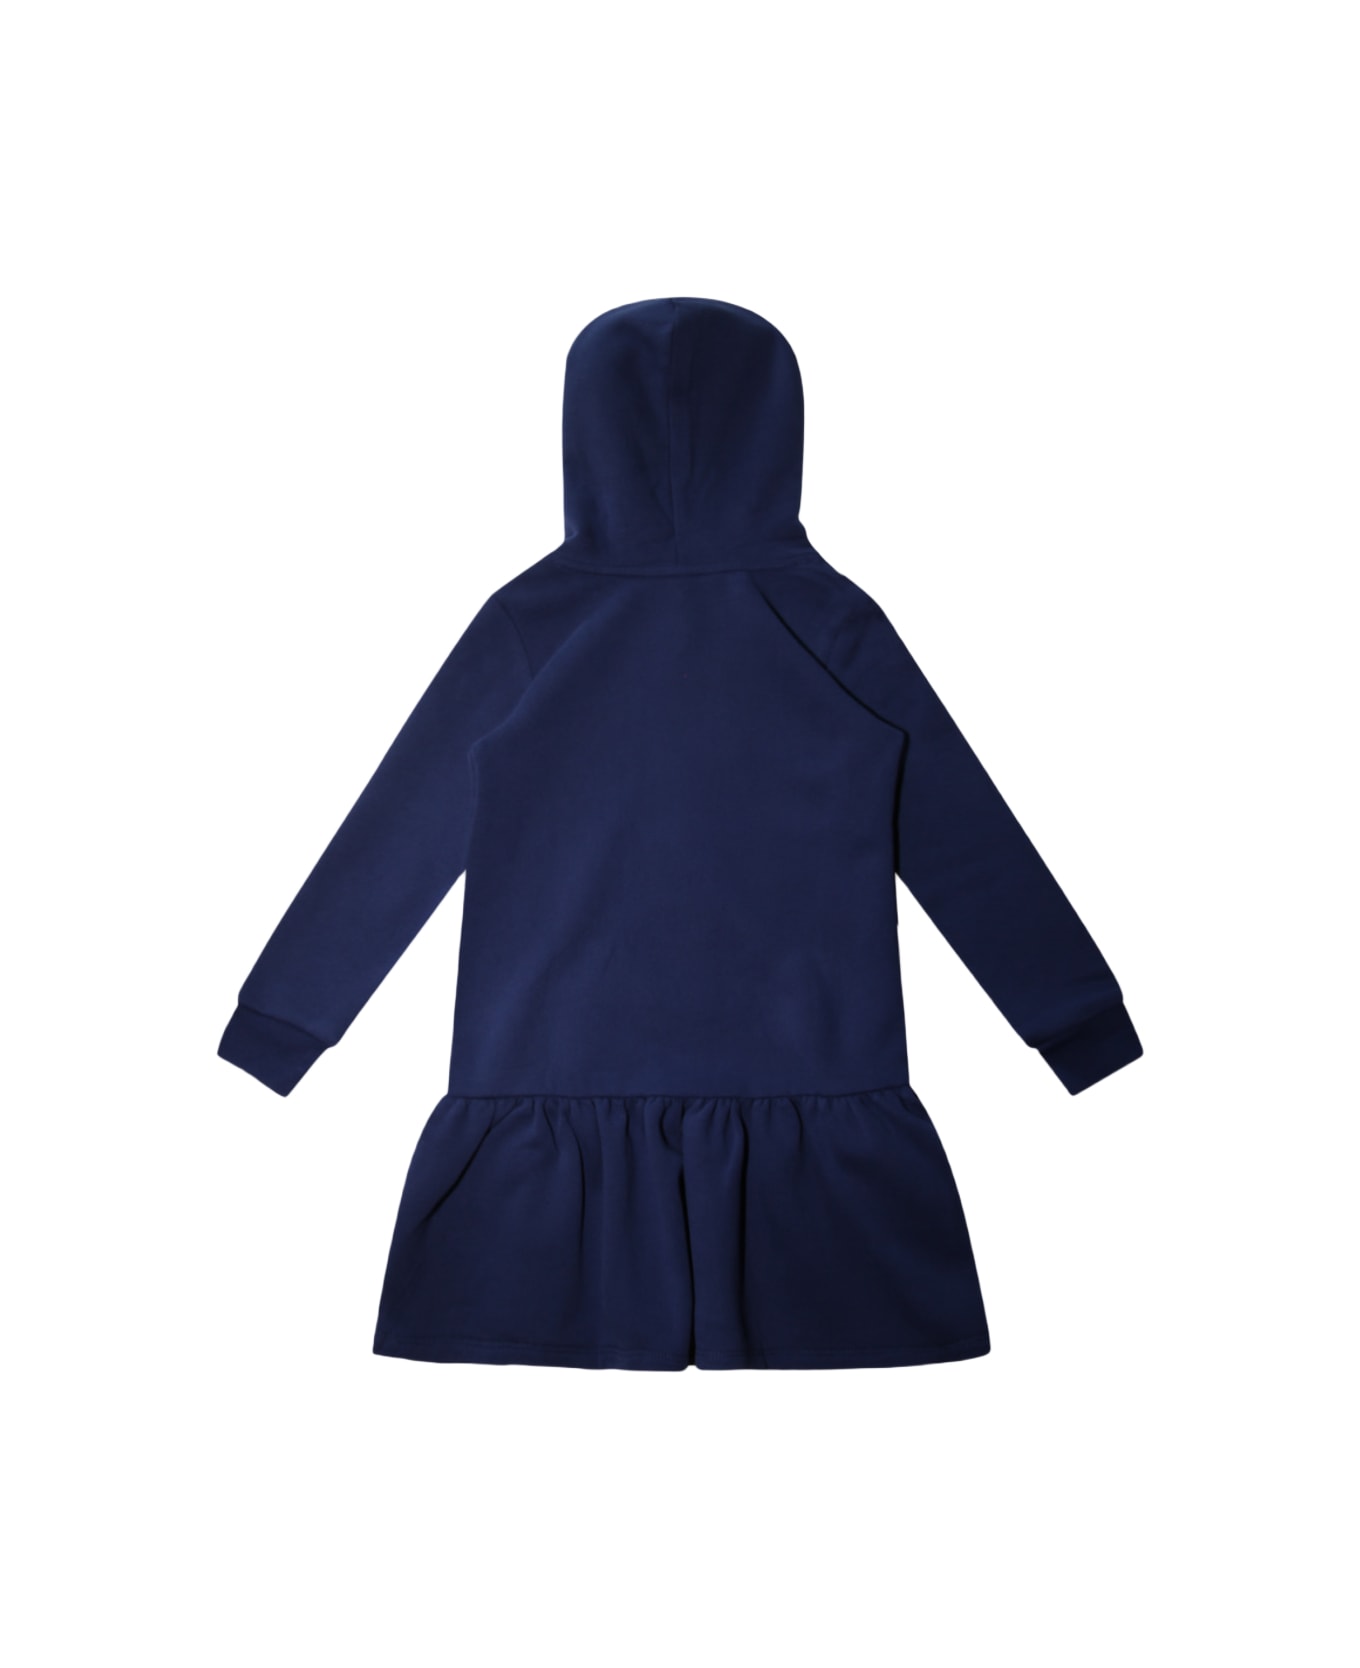 Polo Ralph Lauren Navy Cotton Dress - Blue ジャンプスーツ